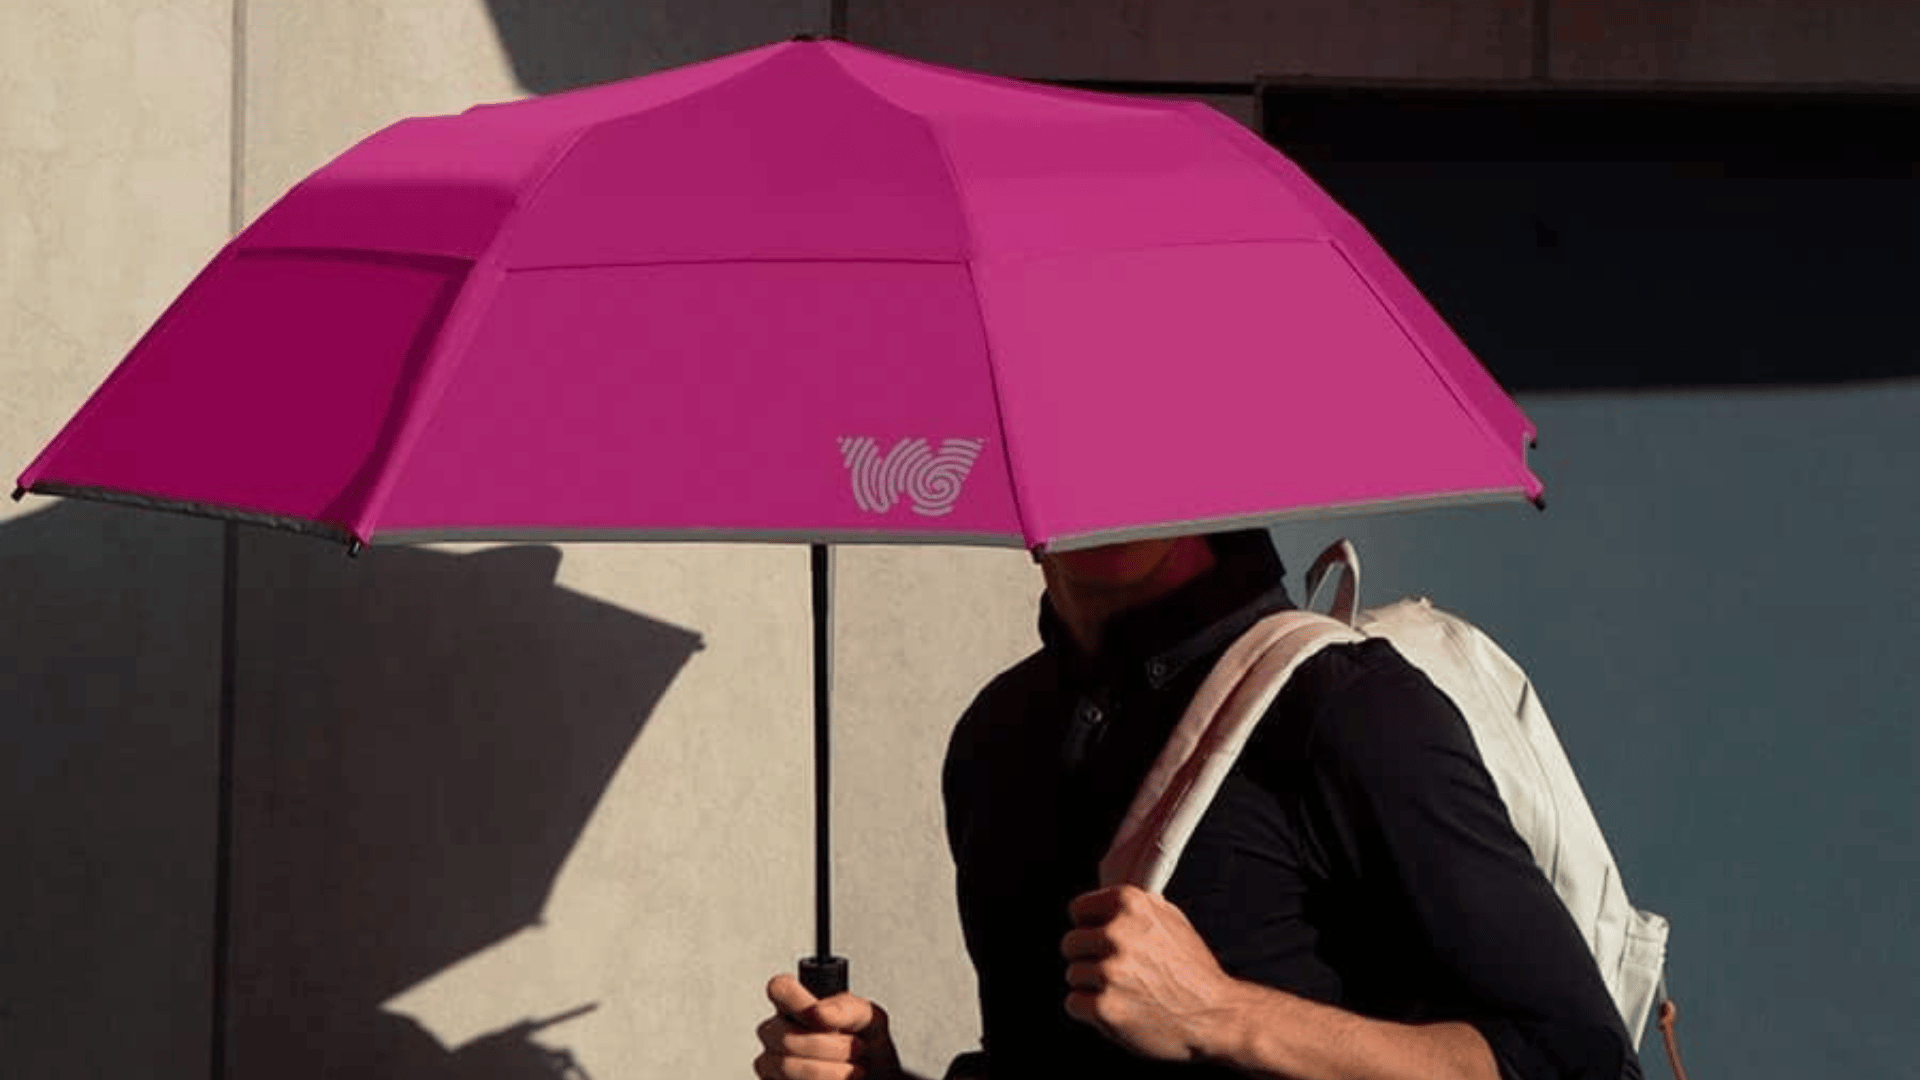 Weatherman collapsible umbrella